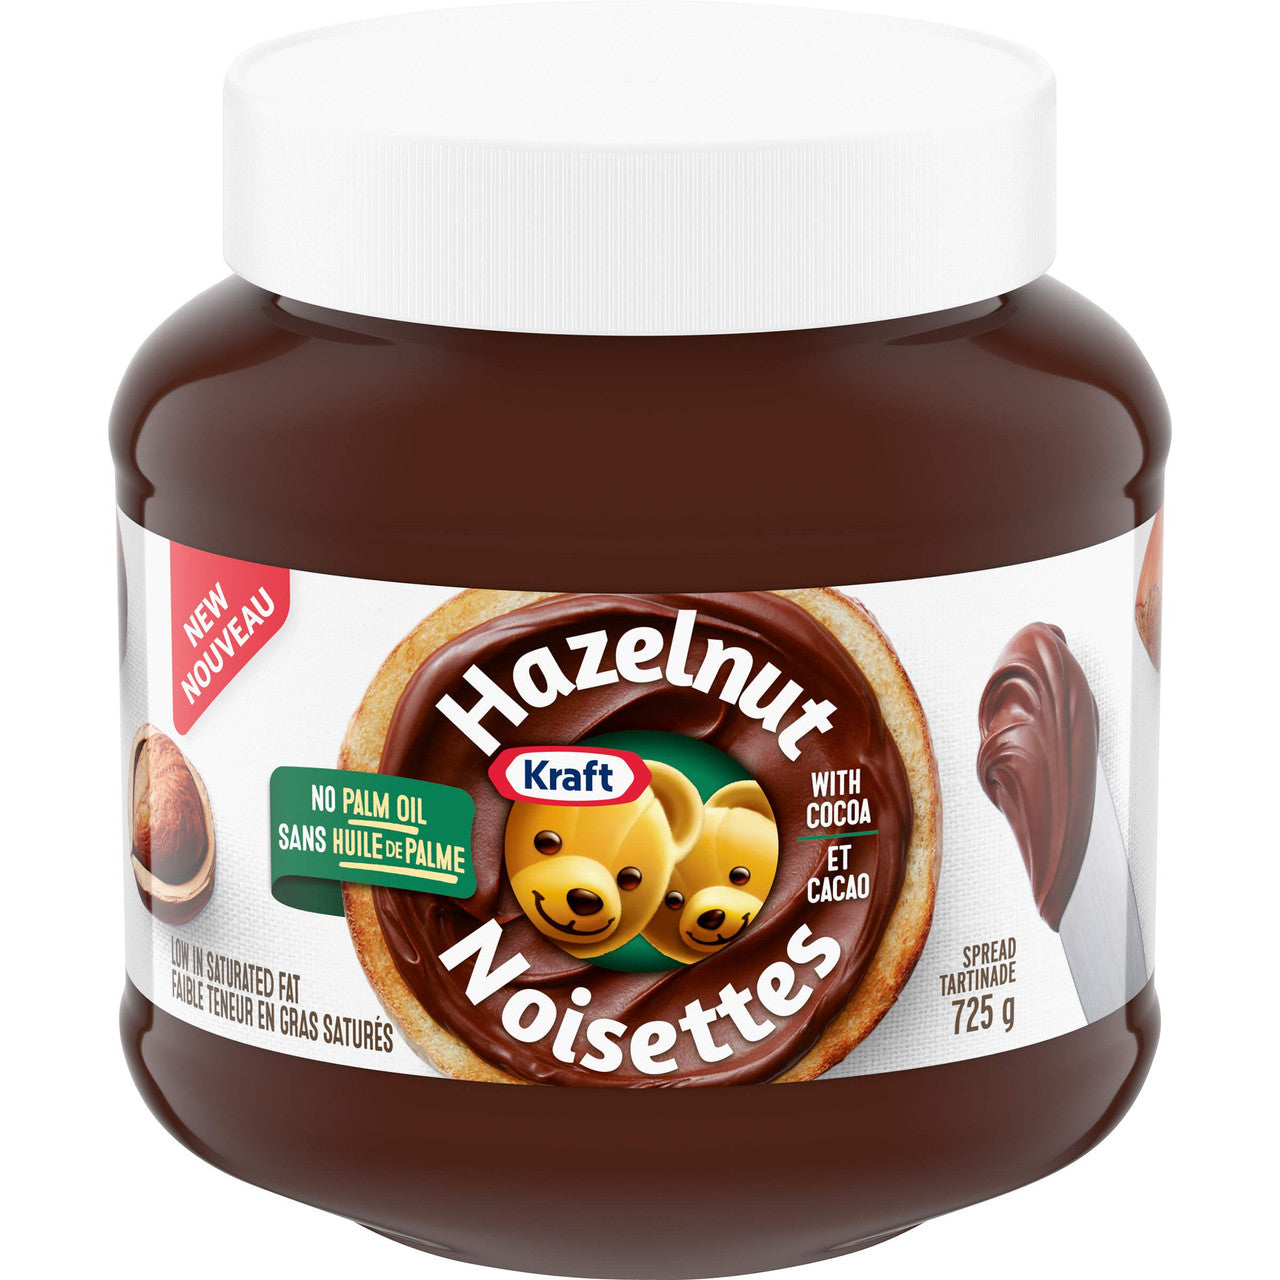 Kraft Hazelnut Spread with Cocoa, 725g/25.6 oz., {Imported from Canada}